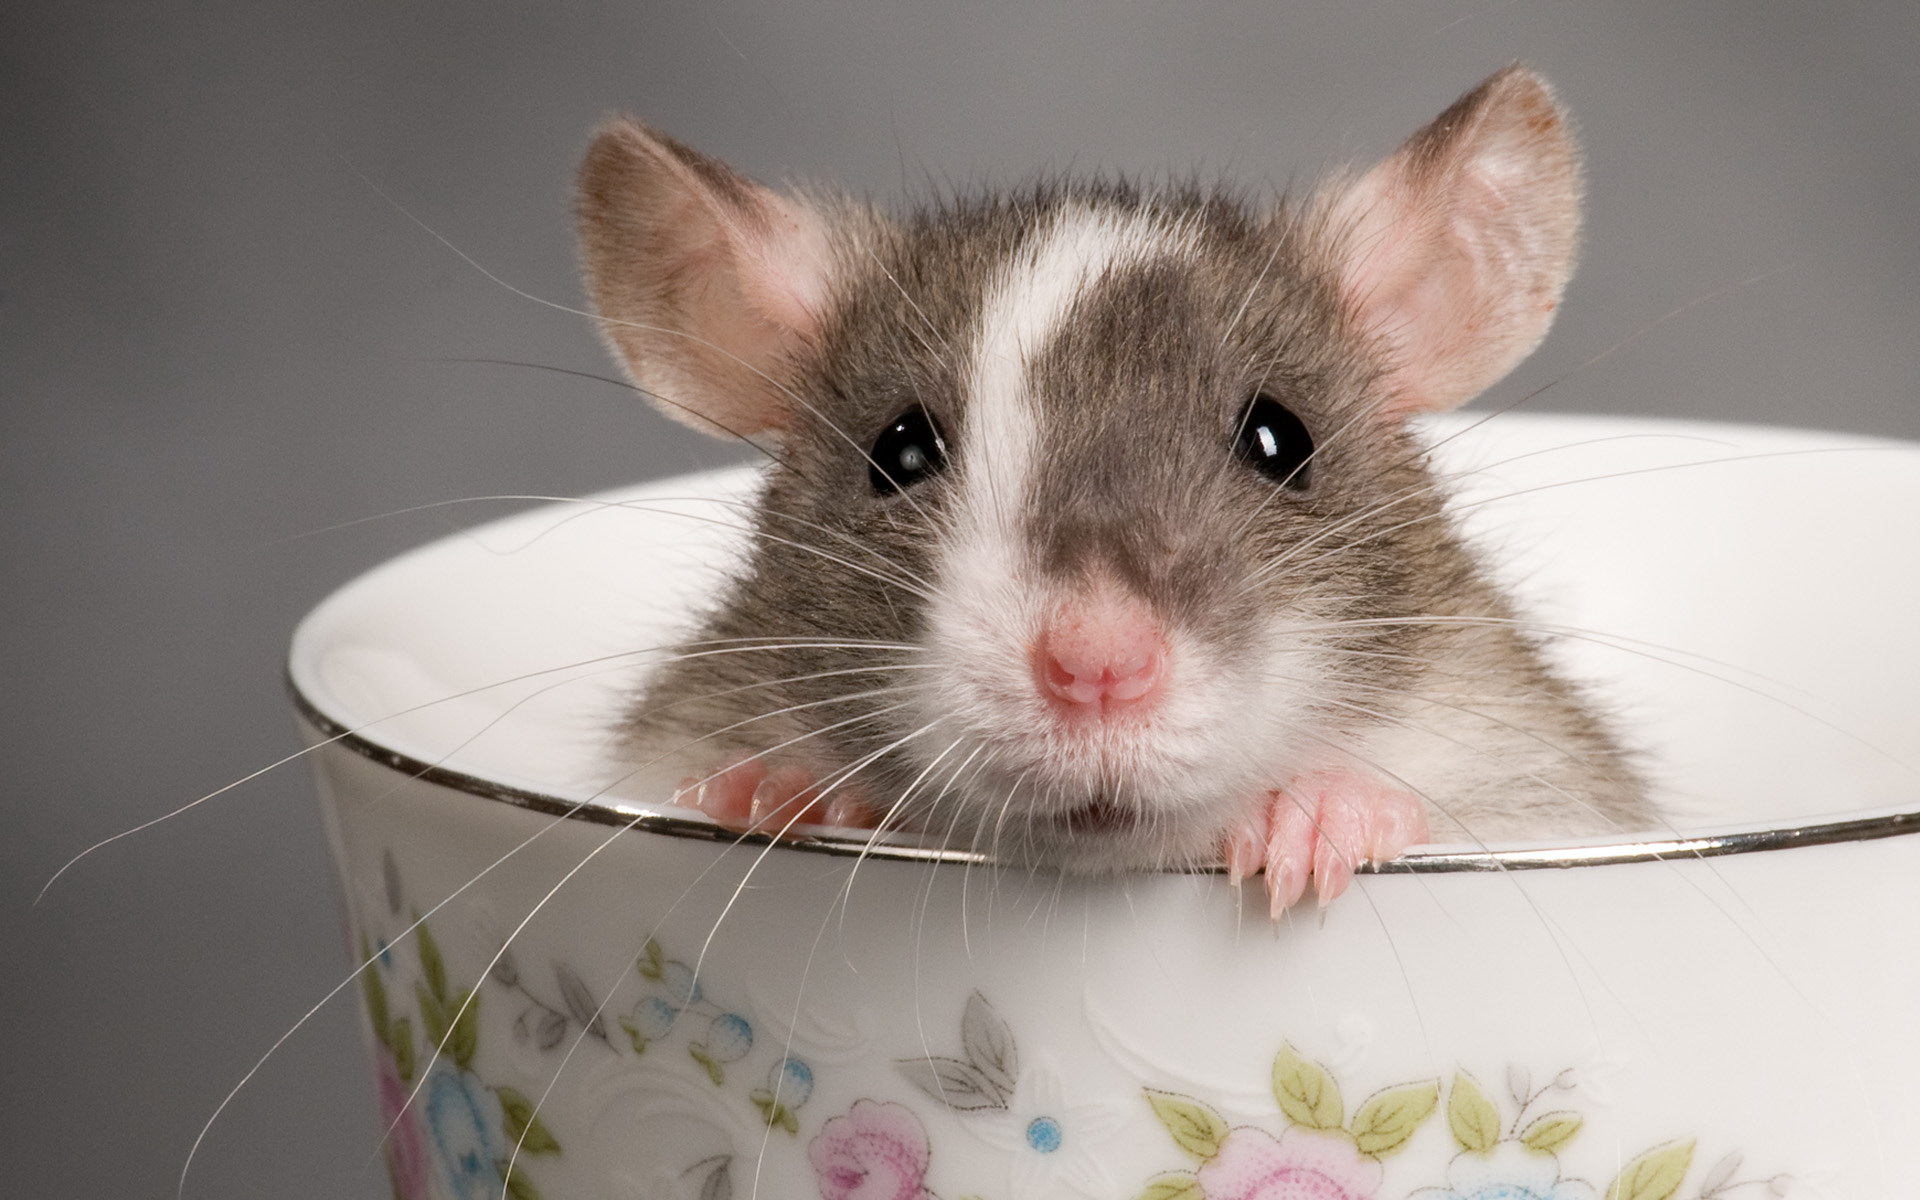 Як боротися з мишами в приватному будинку народними засобами